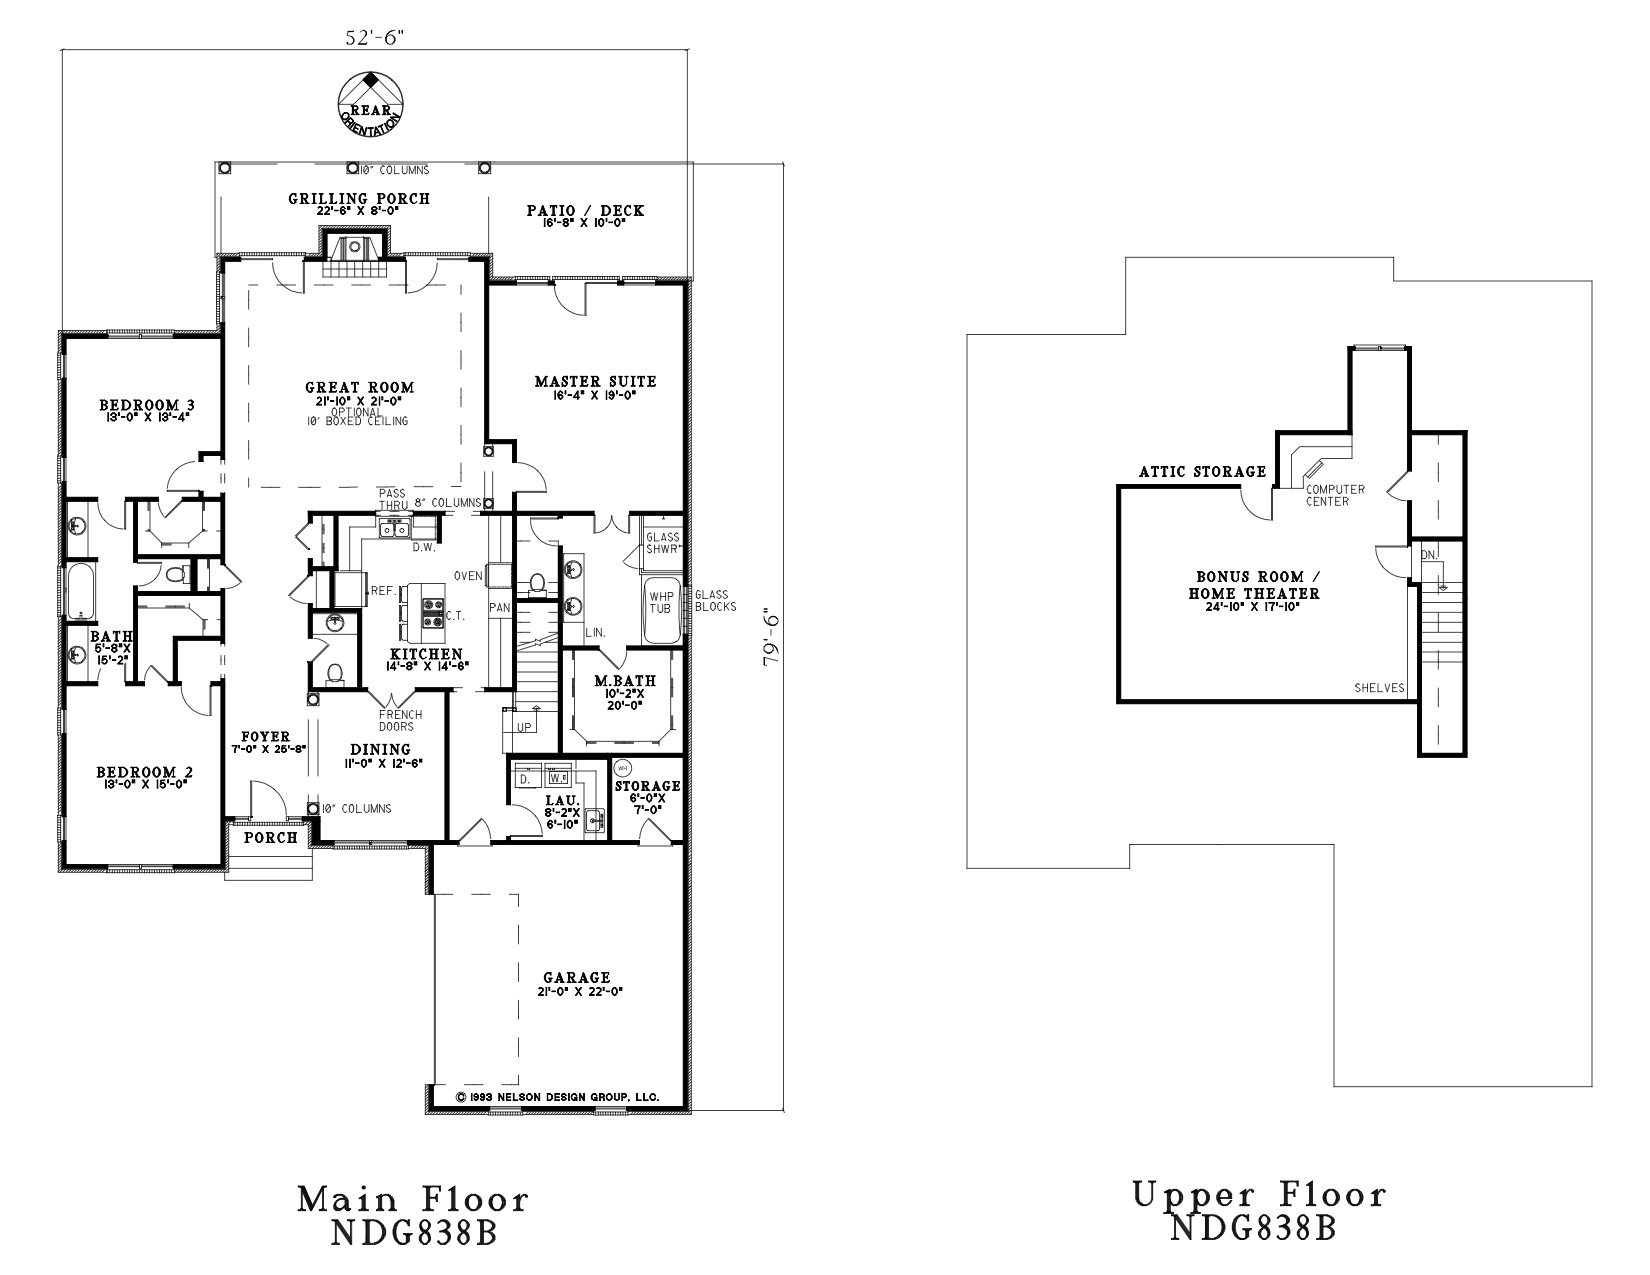 Traditional, European, Ranch House Plans - Home Design NDG-838B # 11490